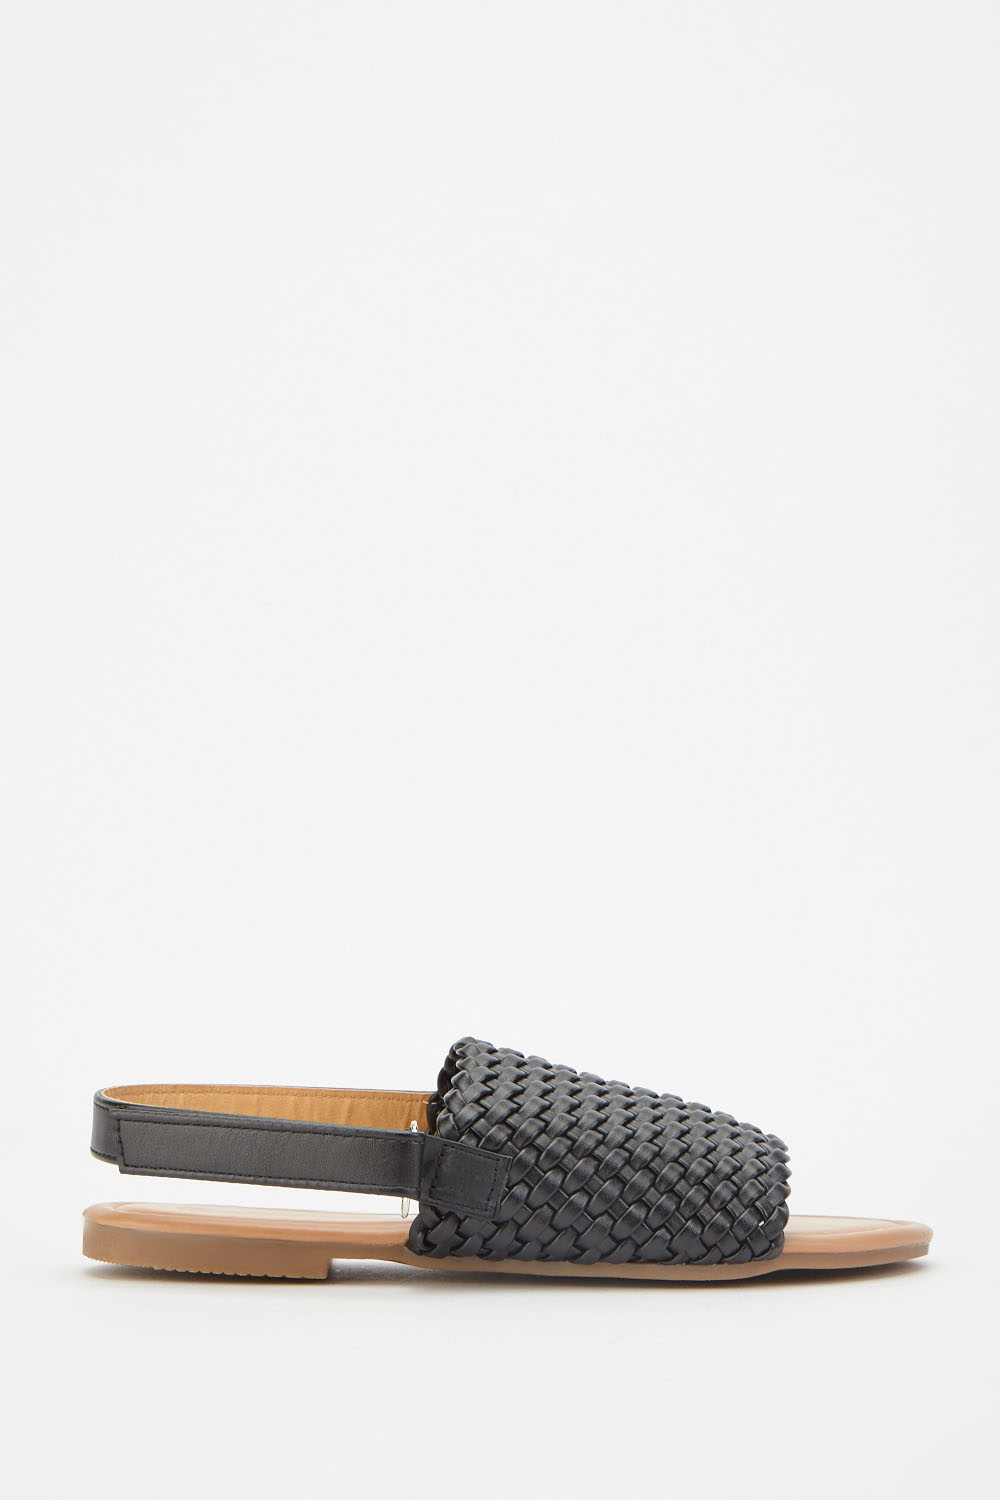 Black Faux Leather Slingback Flat Sandals - Just $6